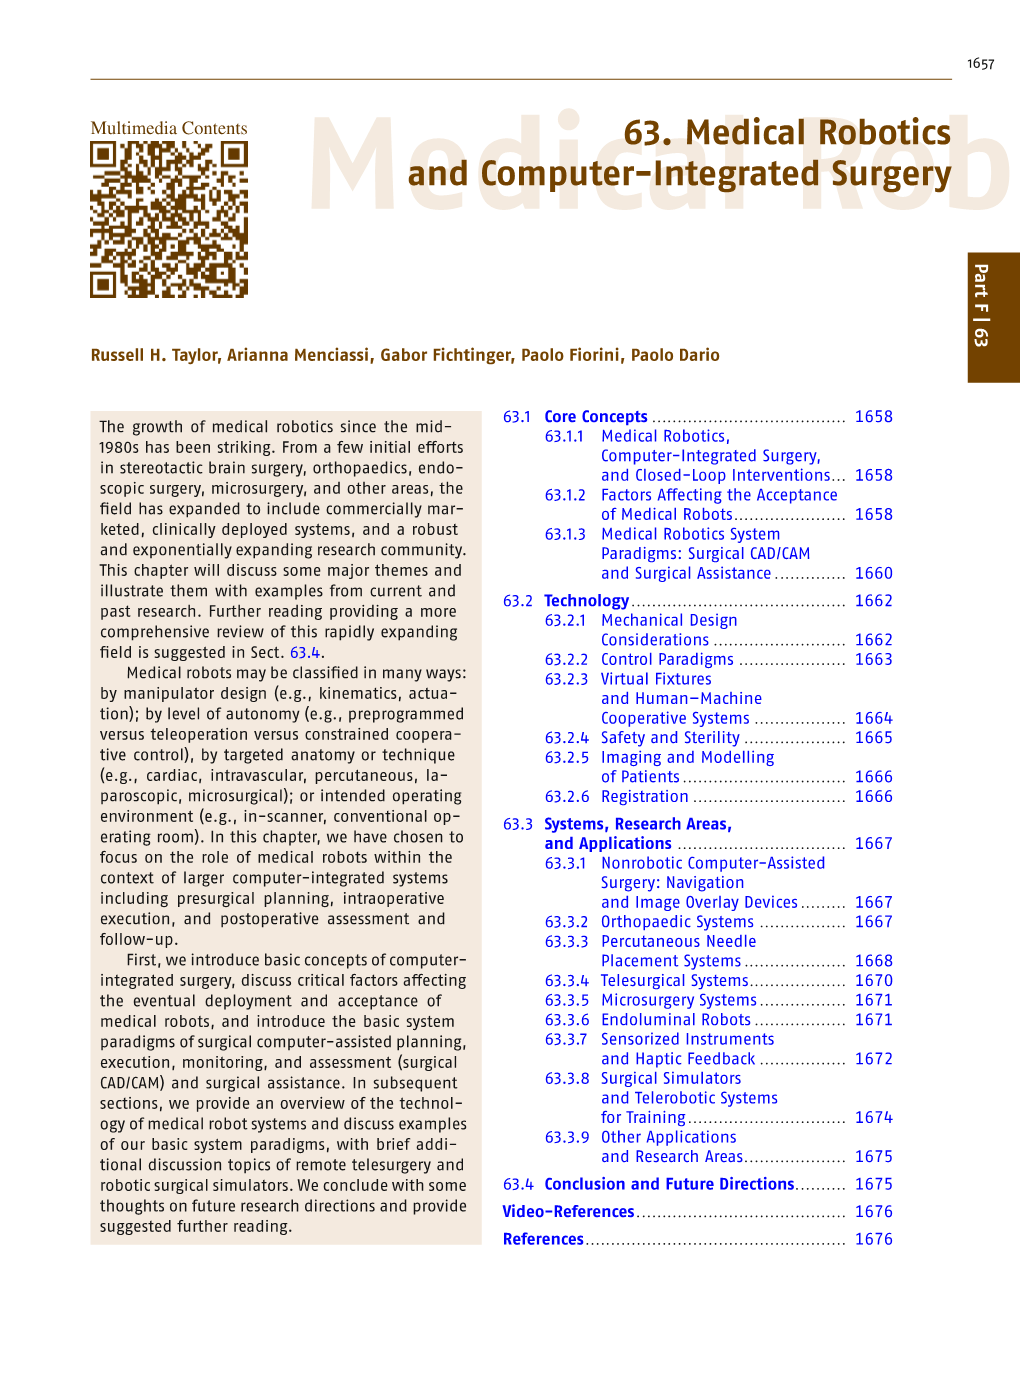 63. Medical Robotics and Computer-Integrated Surgery